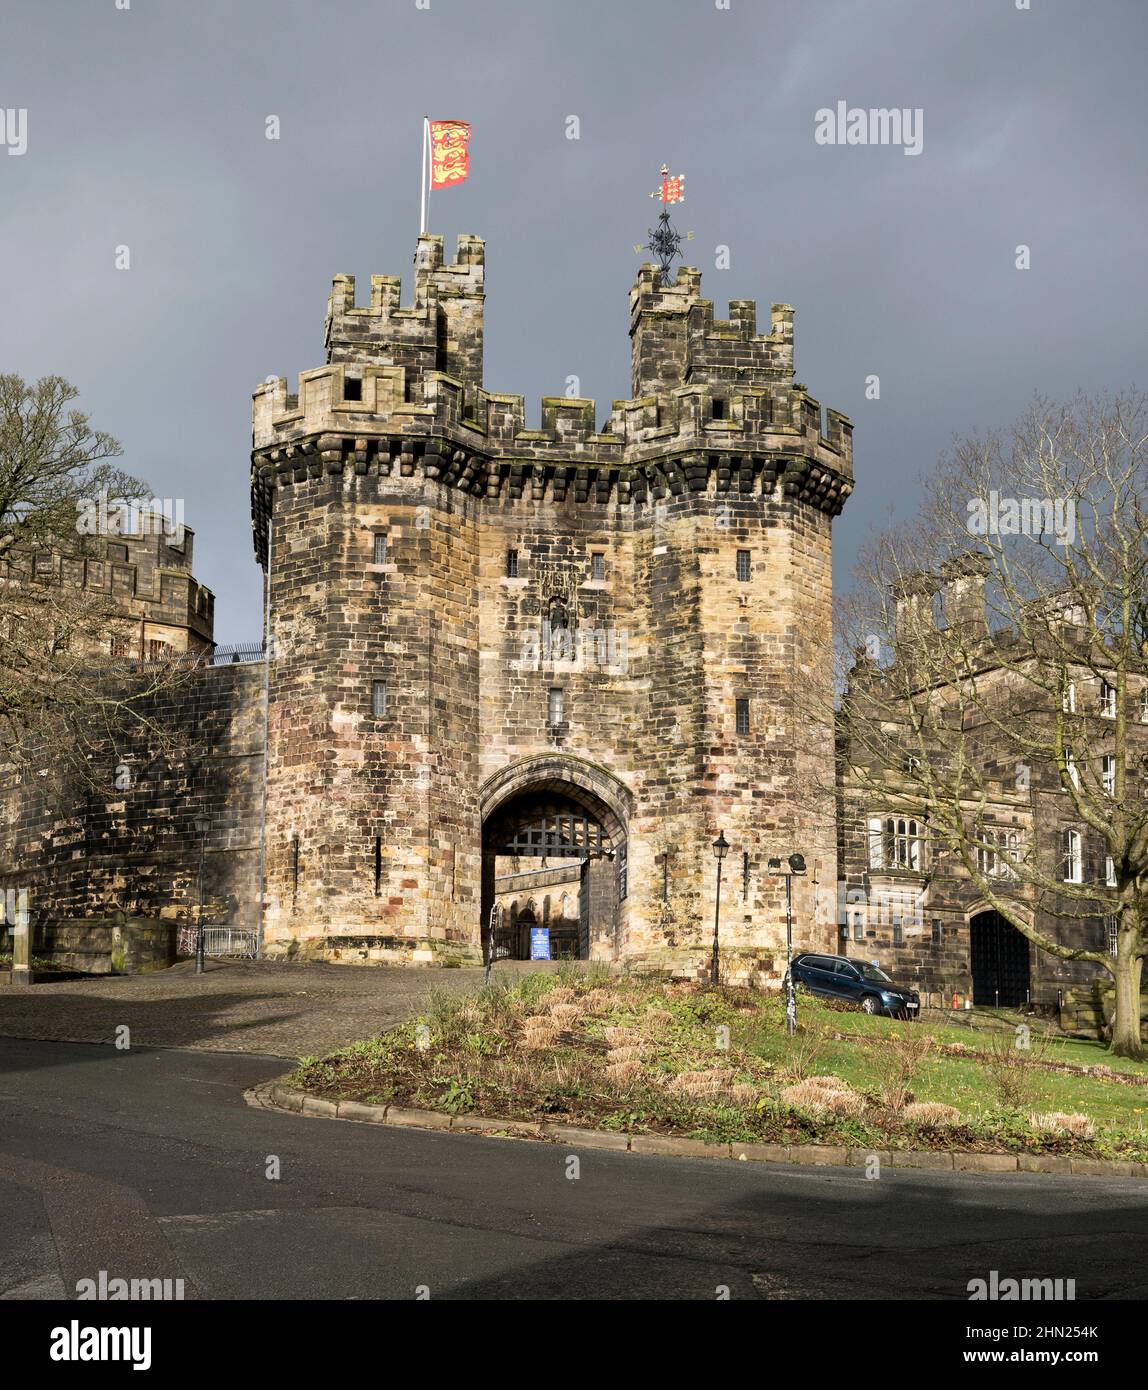 Casa de gatehouse del castillo de Lancaster, Lancaster, Reino Unido Foto de stock